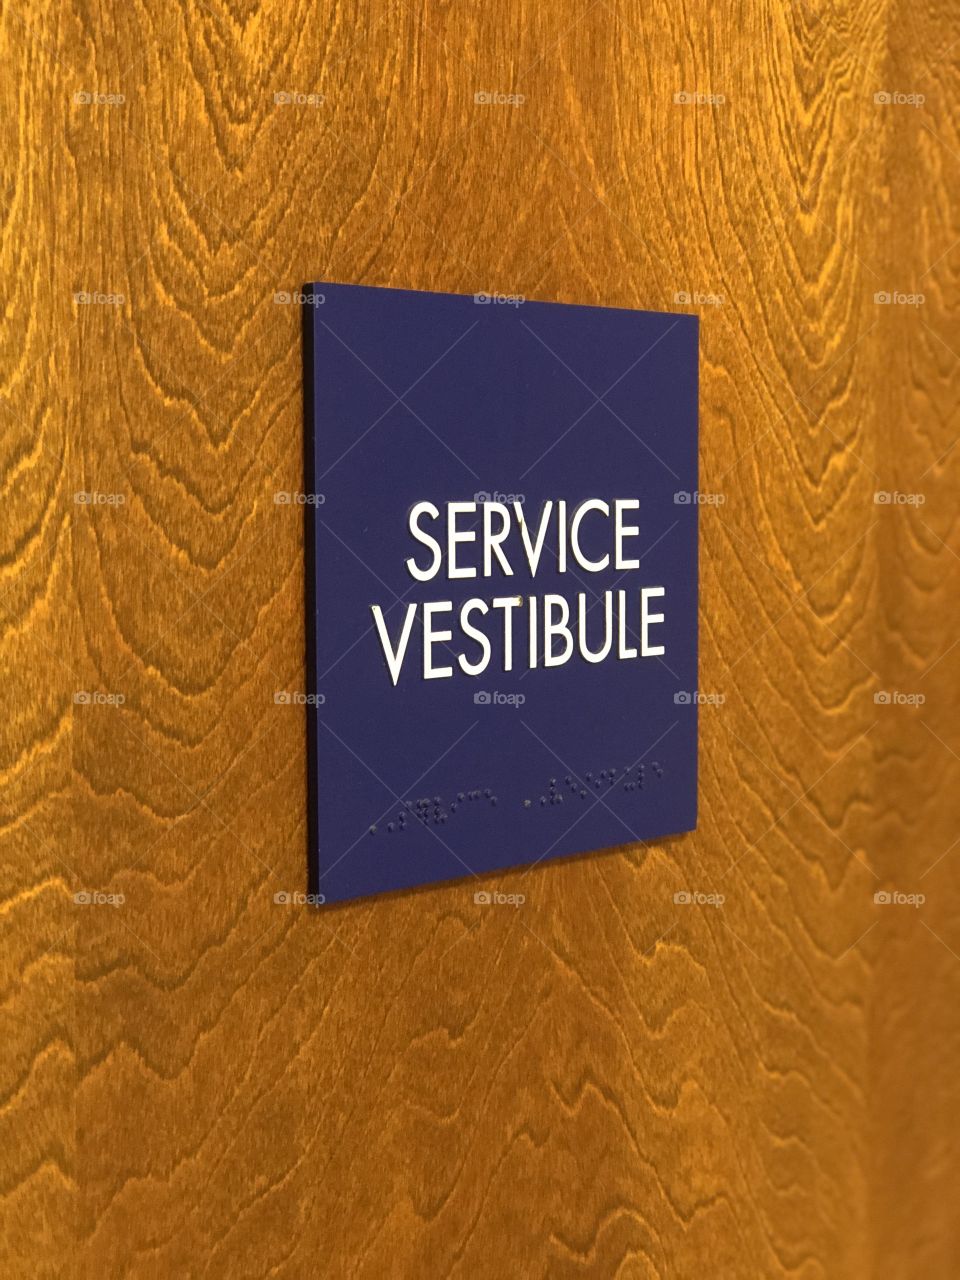 Service vestibule sign